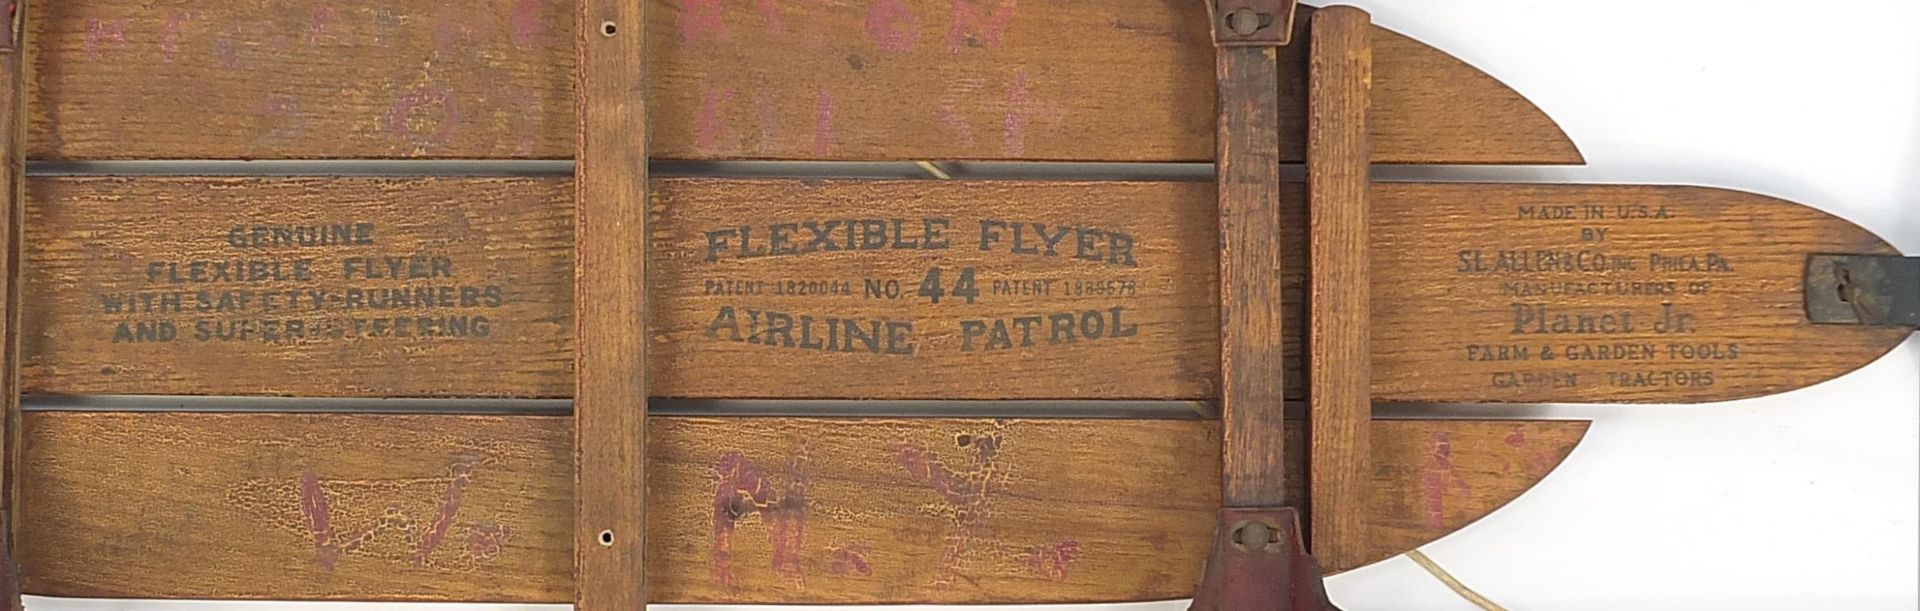 Vintage Flexible Flier no 44 sled by S L Allen & Co, 114cm in length - Image 3 of 3